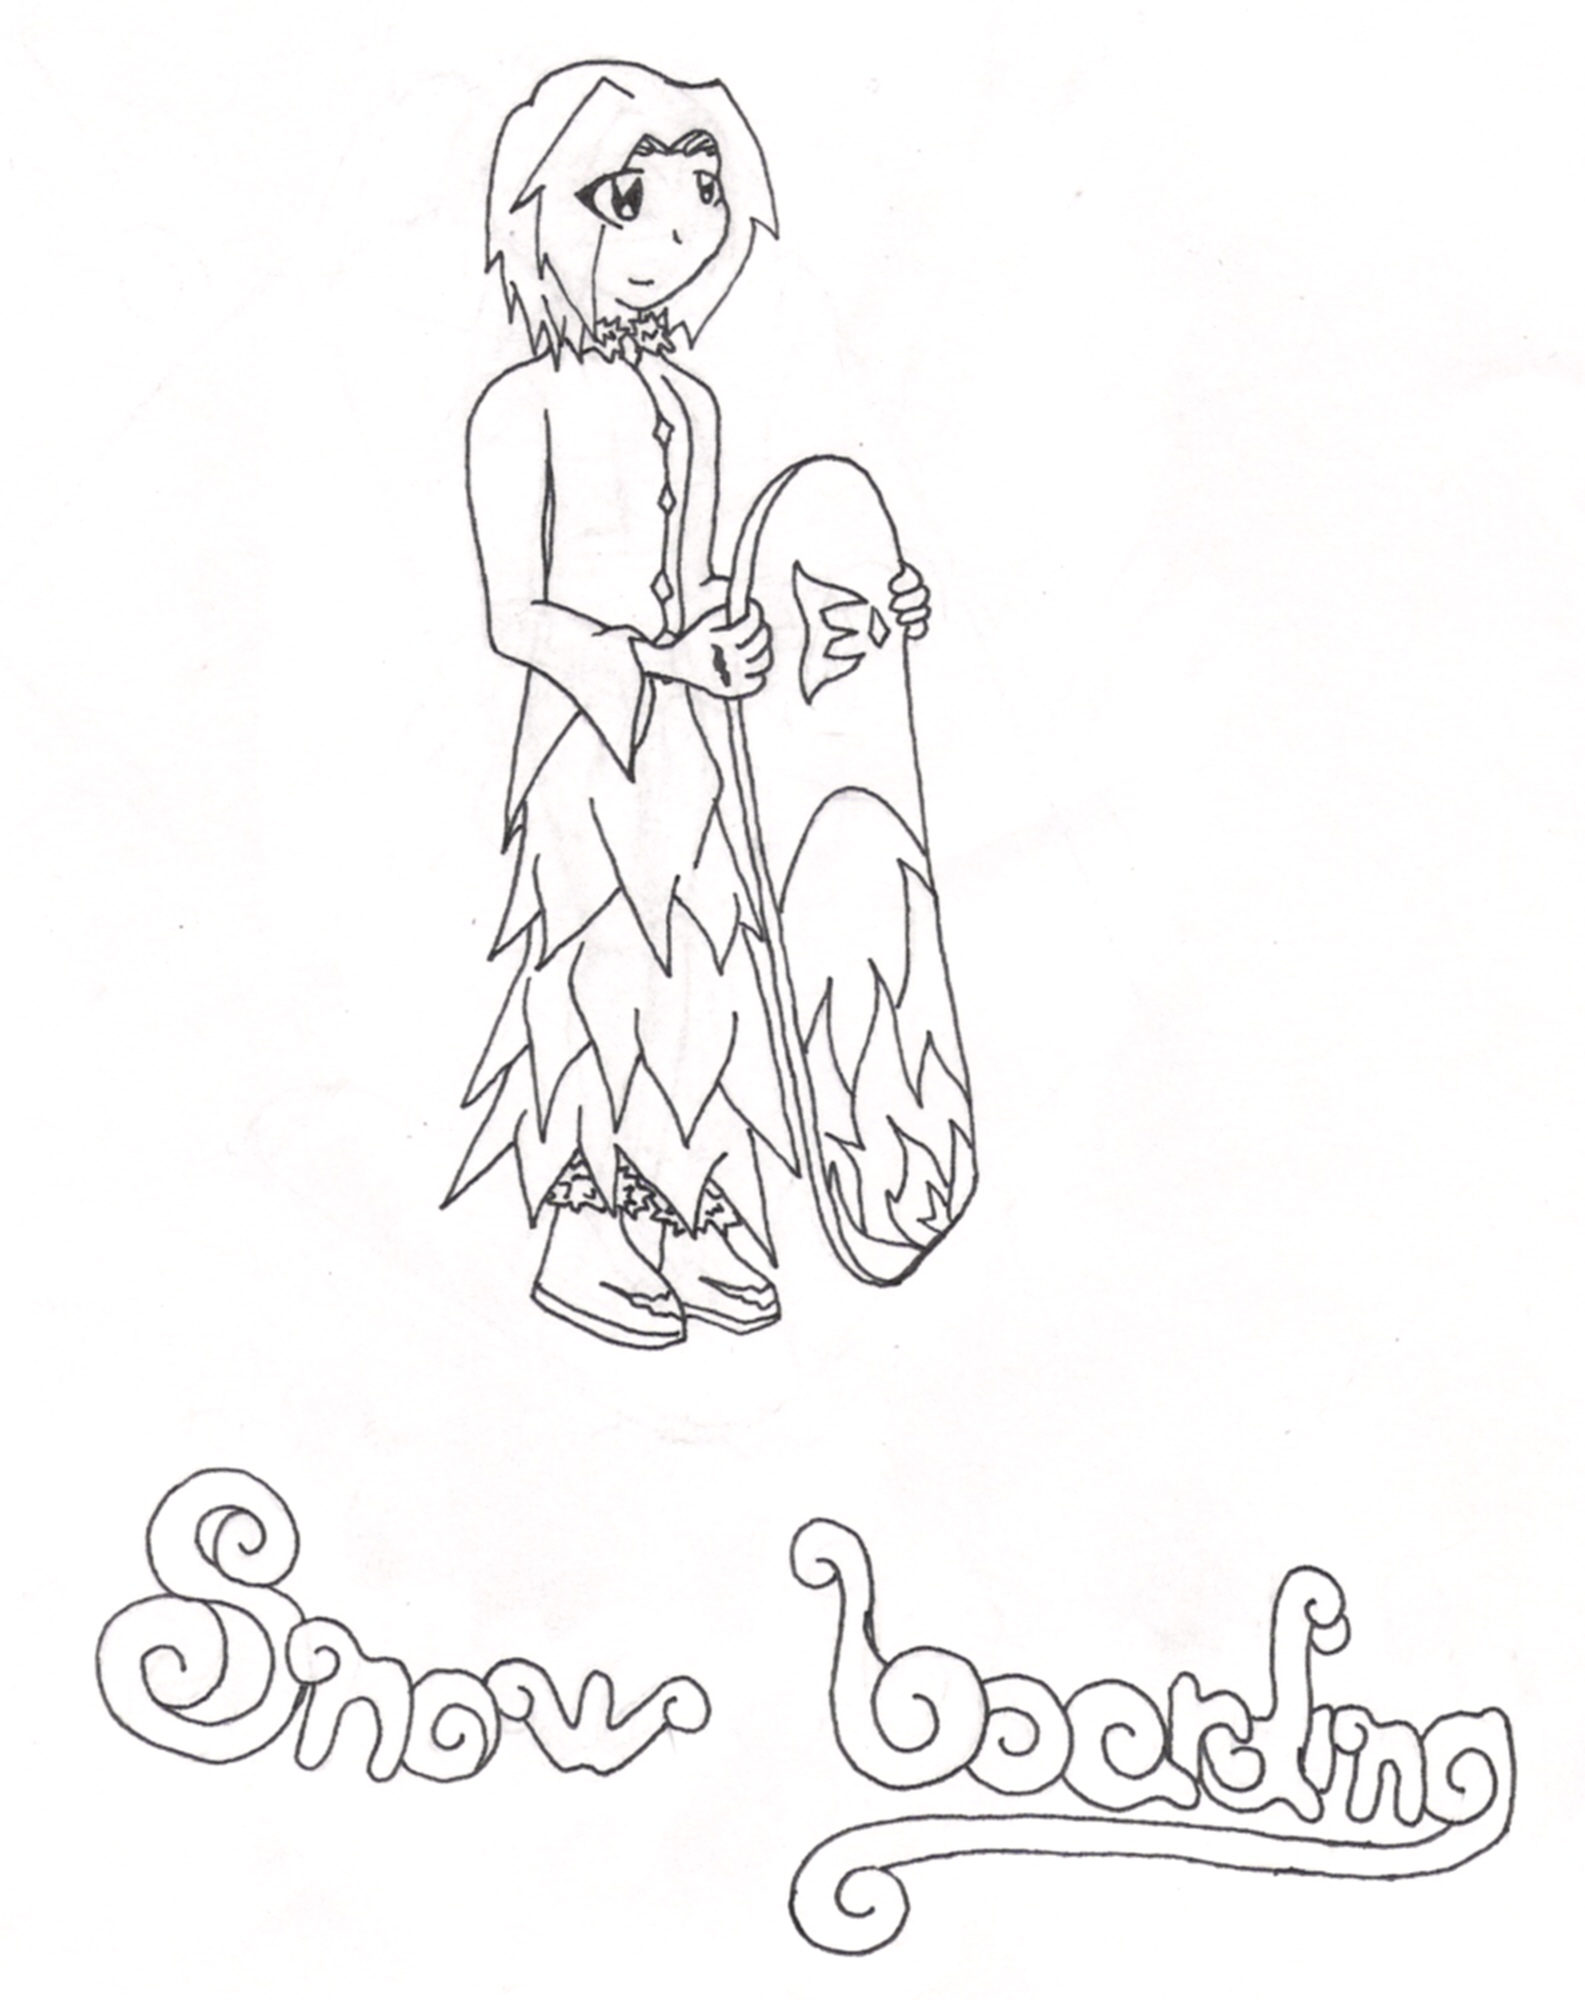 Snowboarding by sasha_tekiyo